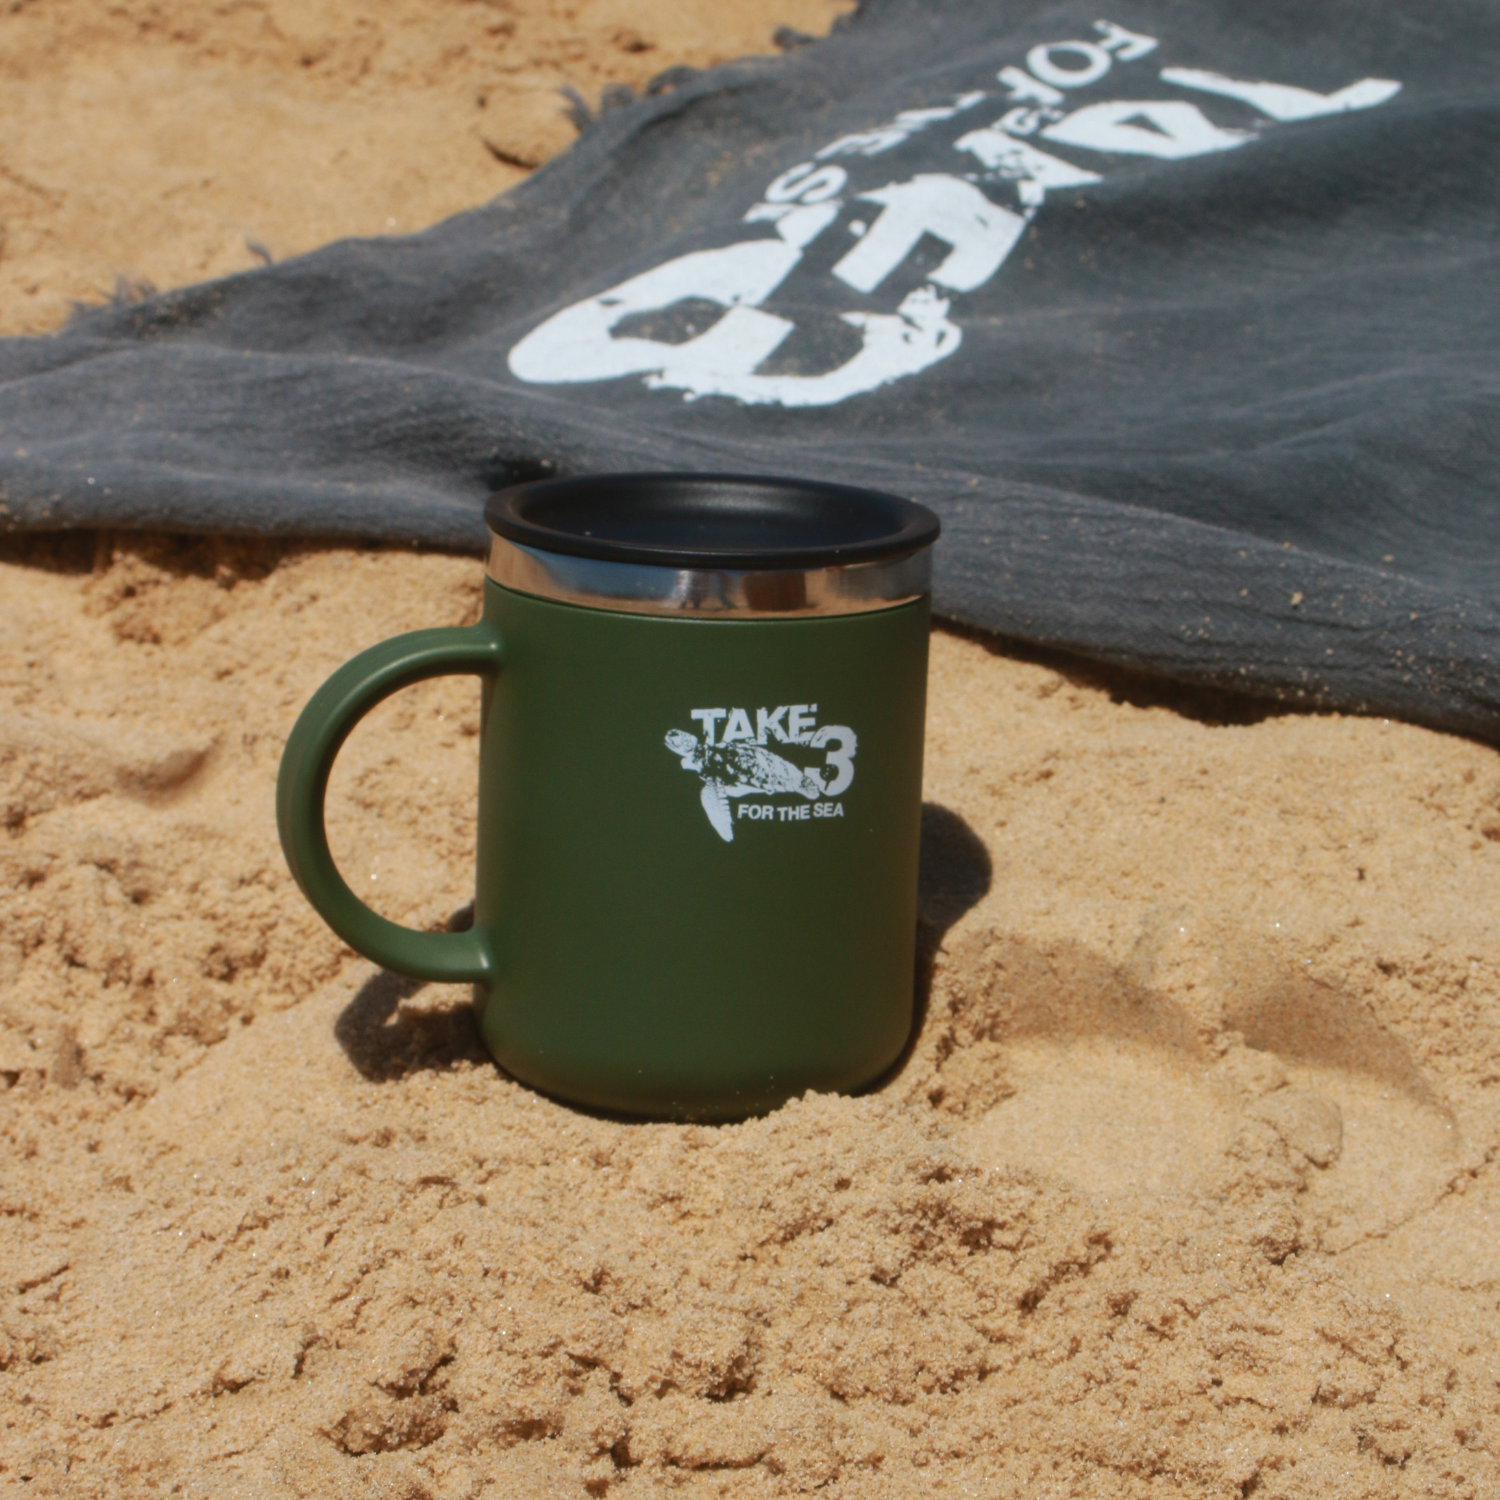 Hydro Flask Mug - Stainless Steel 12 Oz Tea Coffee Travel Mug - Vacuum  Insulated - Snapper M12CP604 - Jacob Time Inc